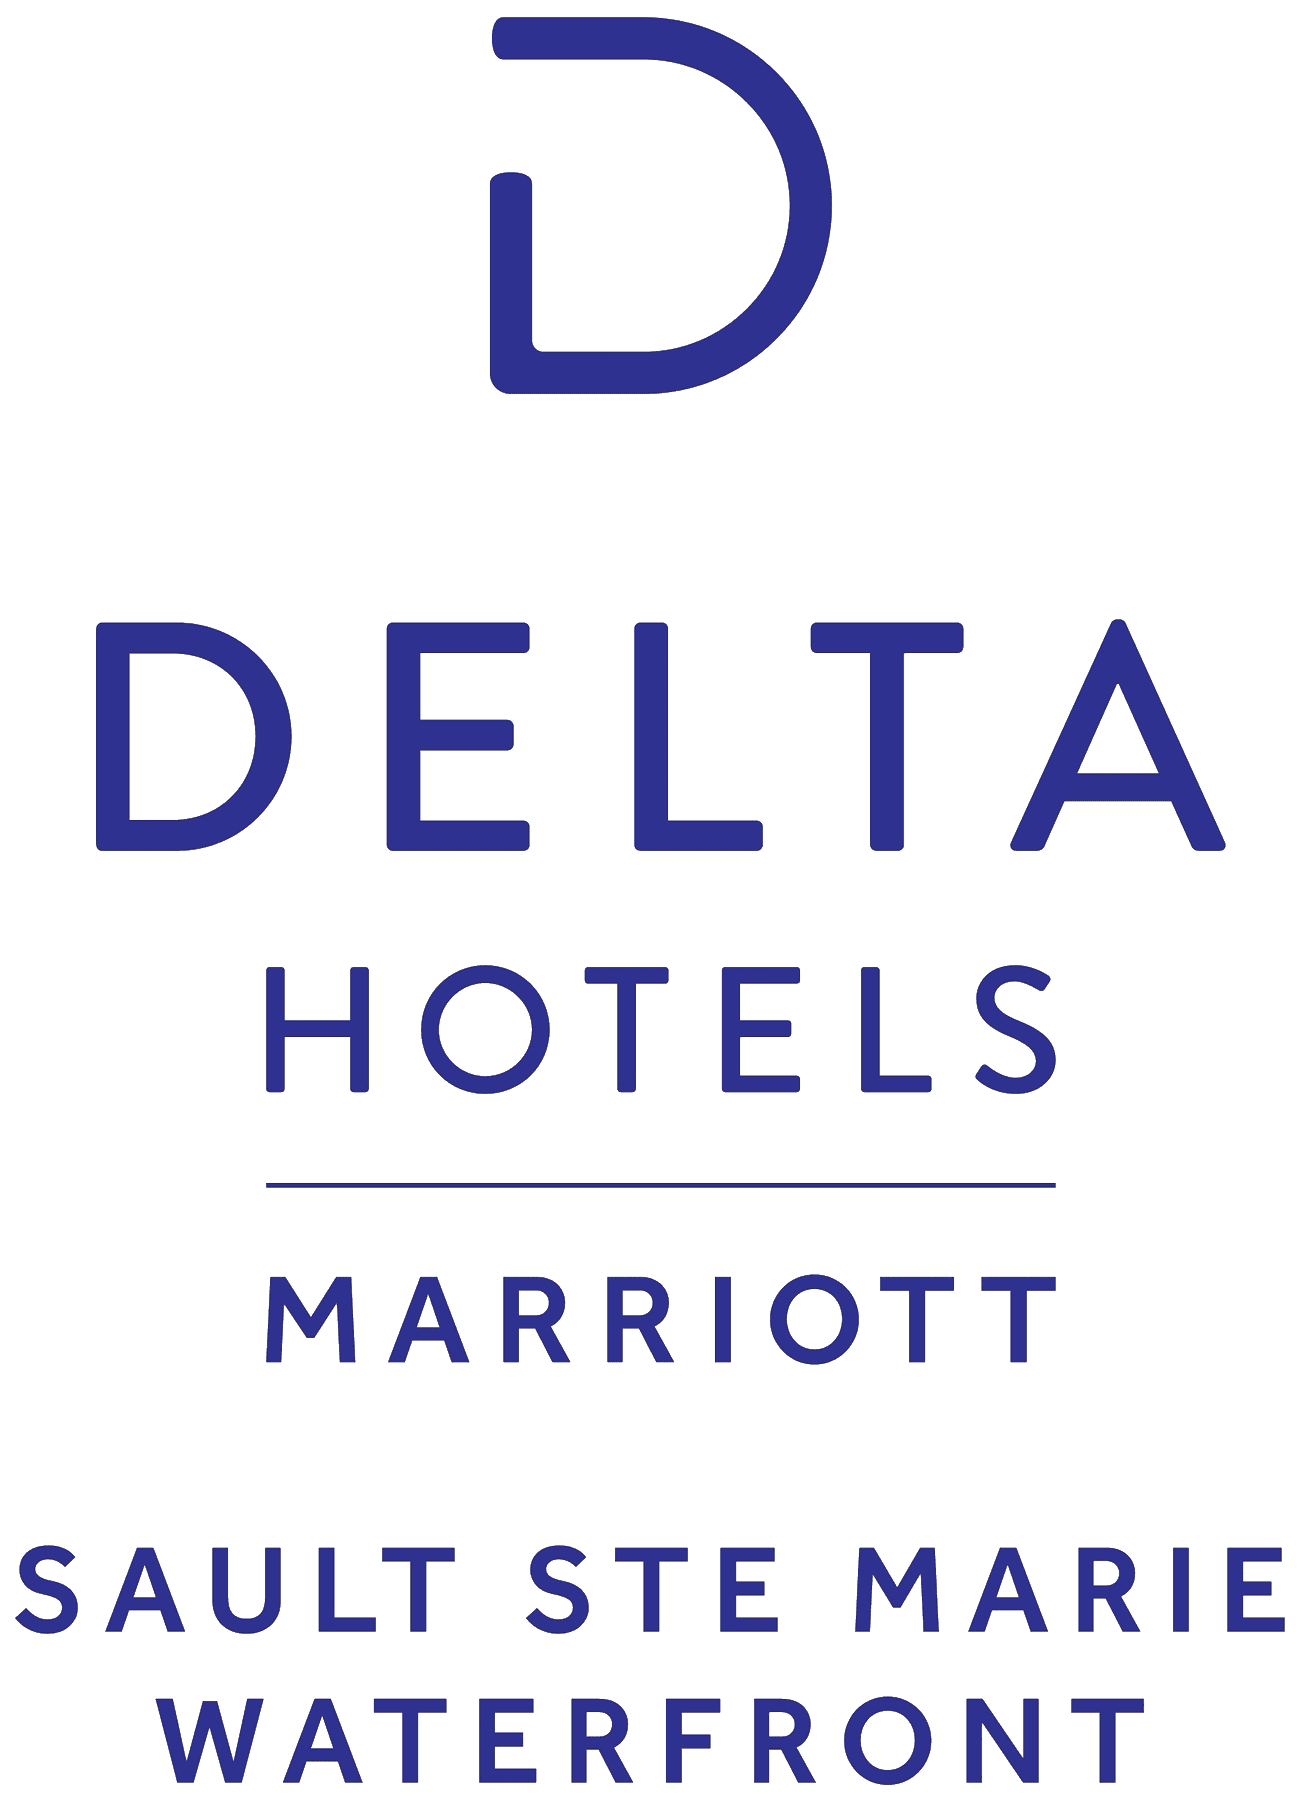 Delta Hotels Marriott Sault Ste Marie Waterfront logo